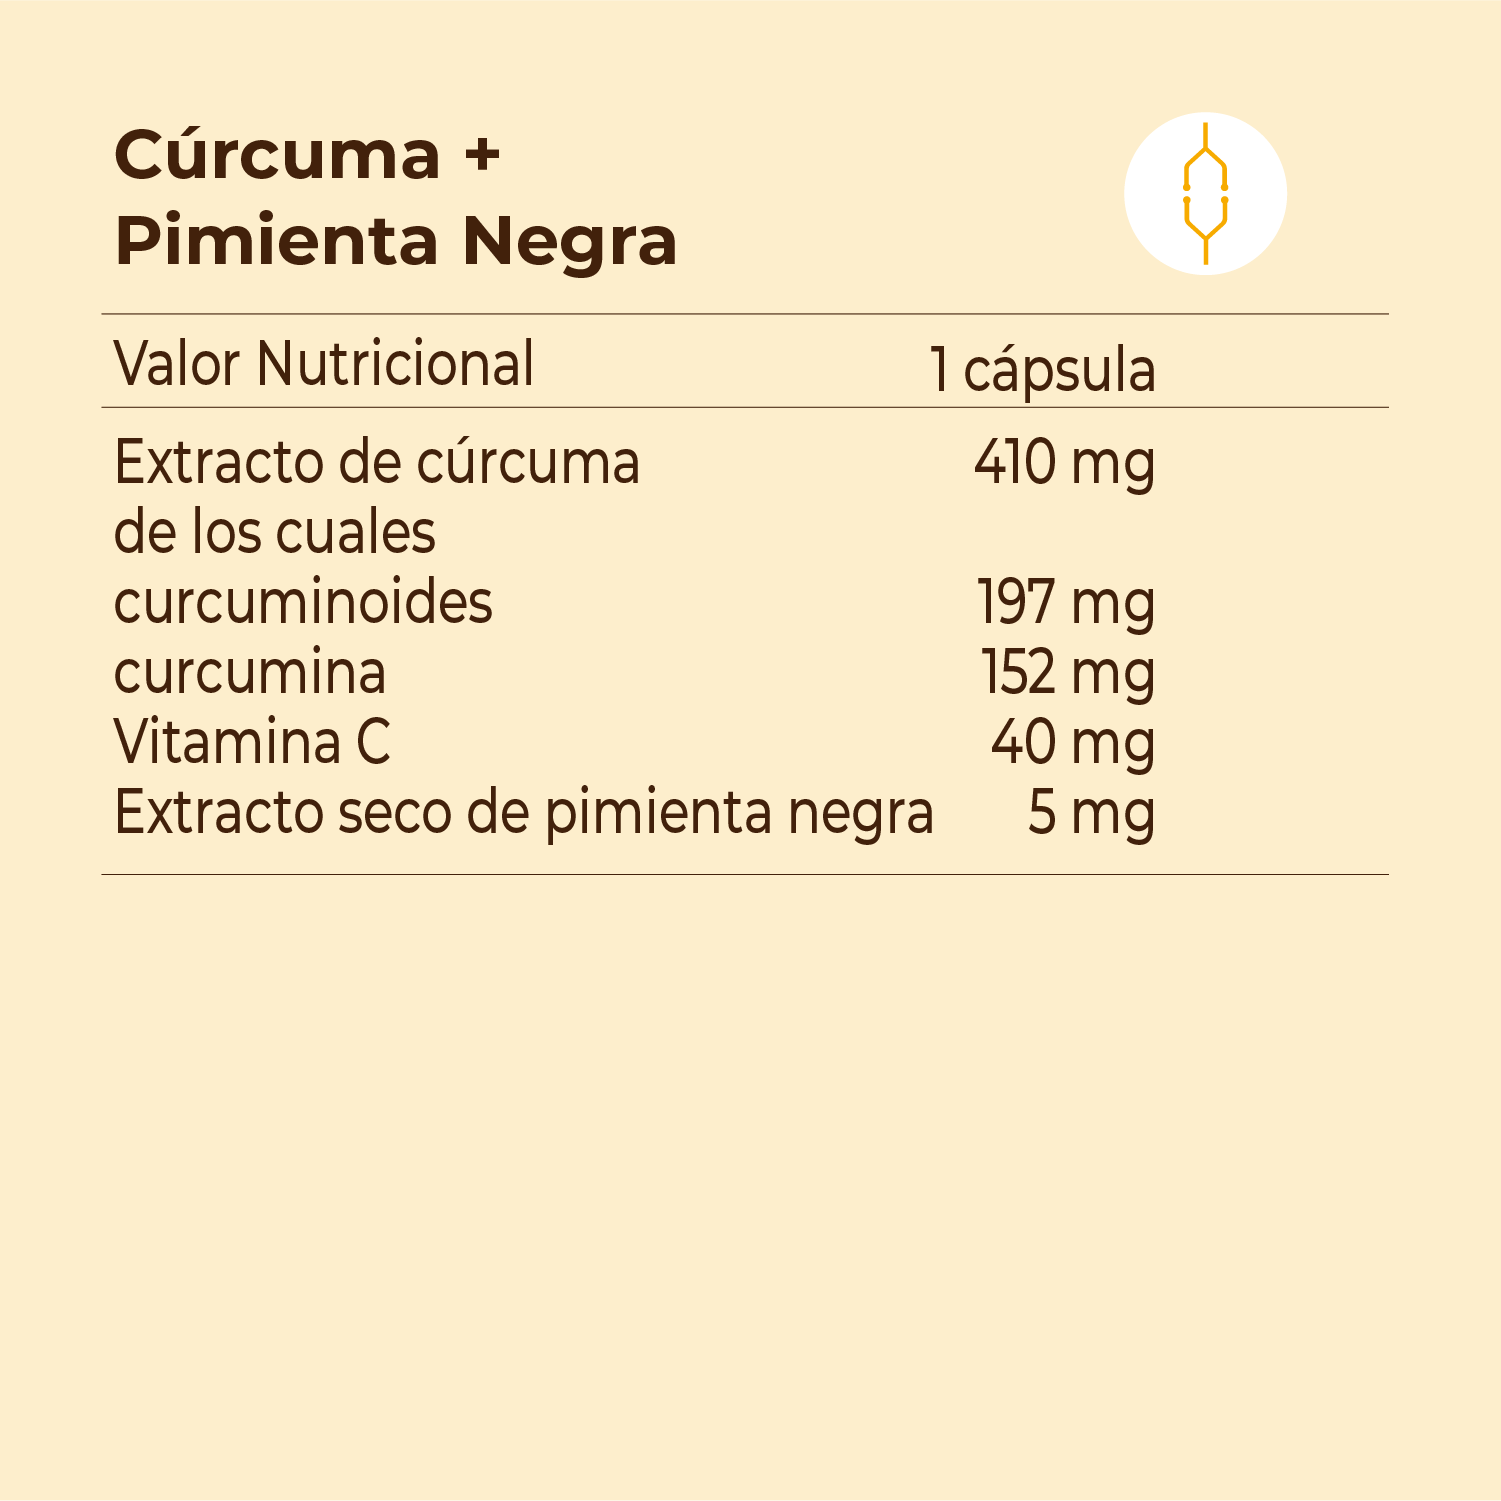 Cúrcuma + Pimienta negra